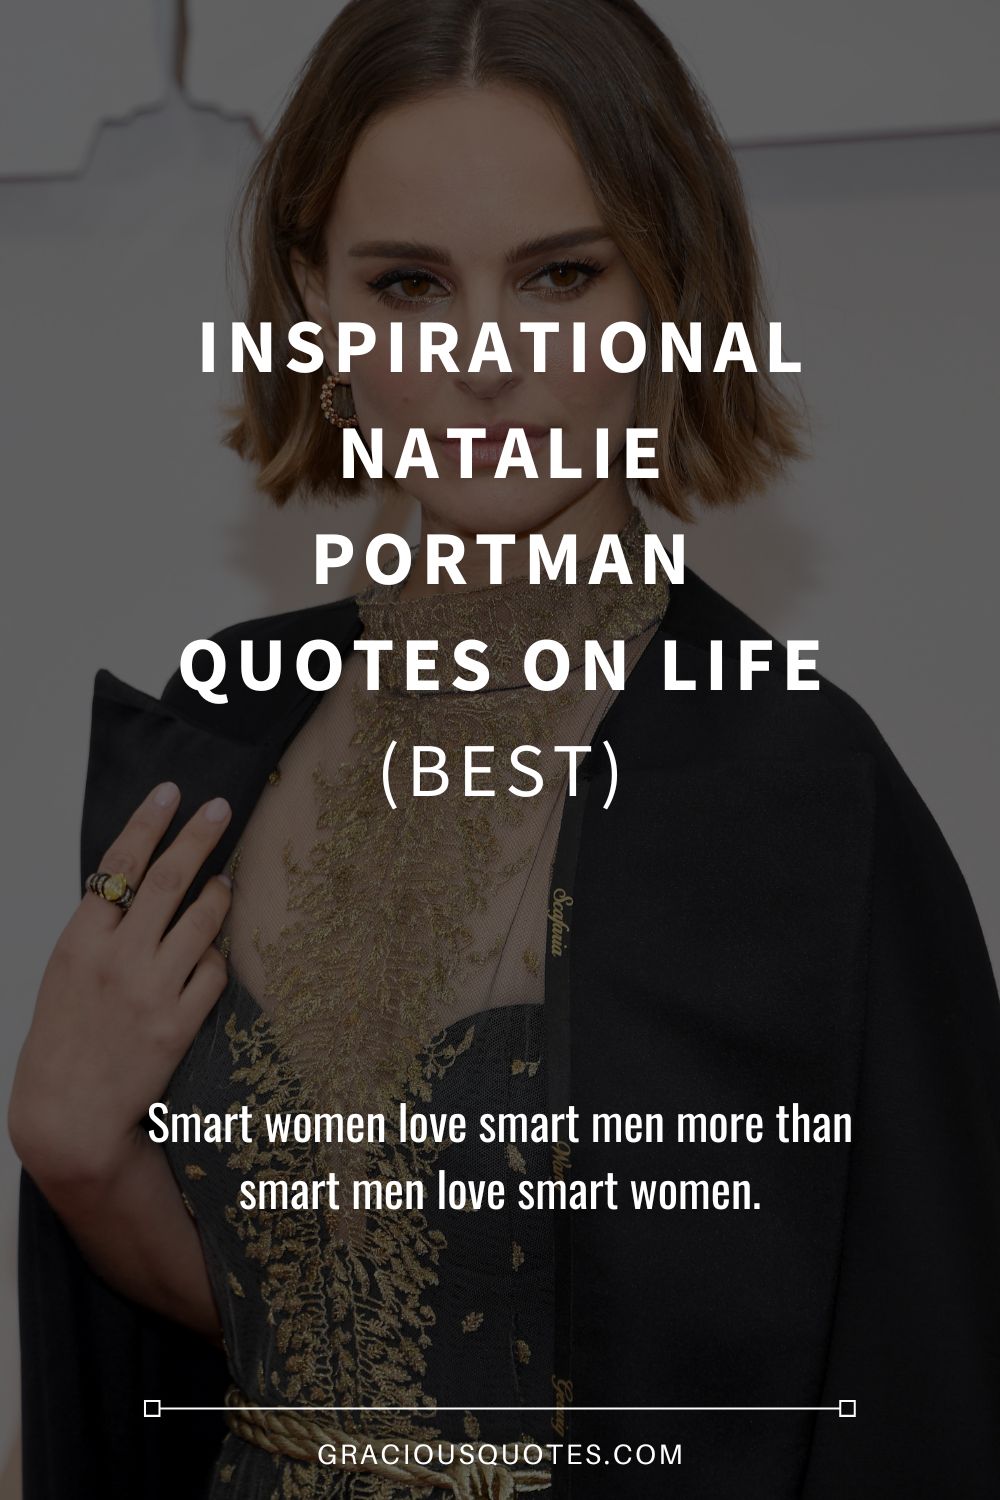 Inspirational Natalie Portman Quotes on Life (BEST) - Gracious Quotes